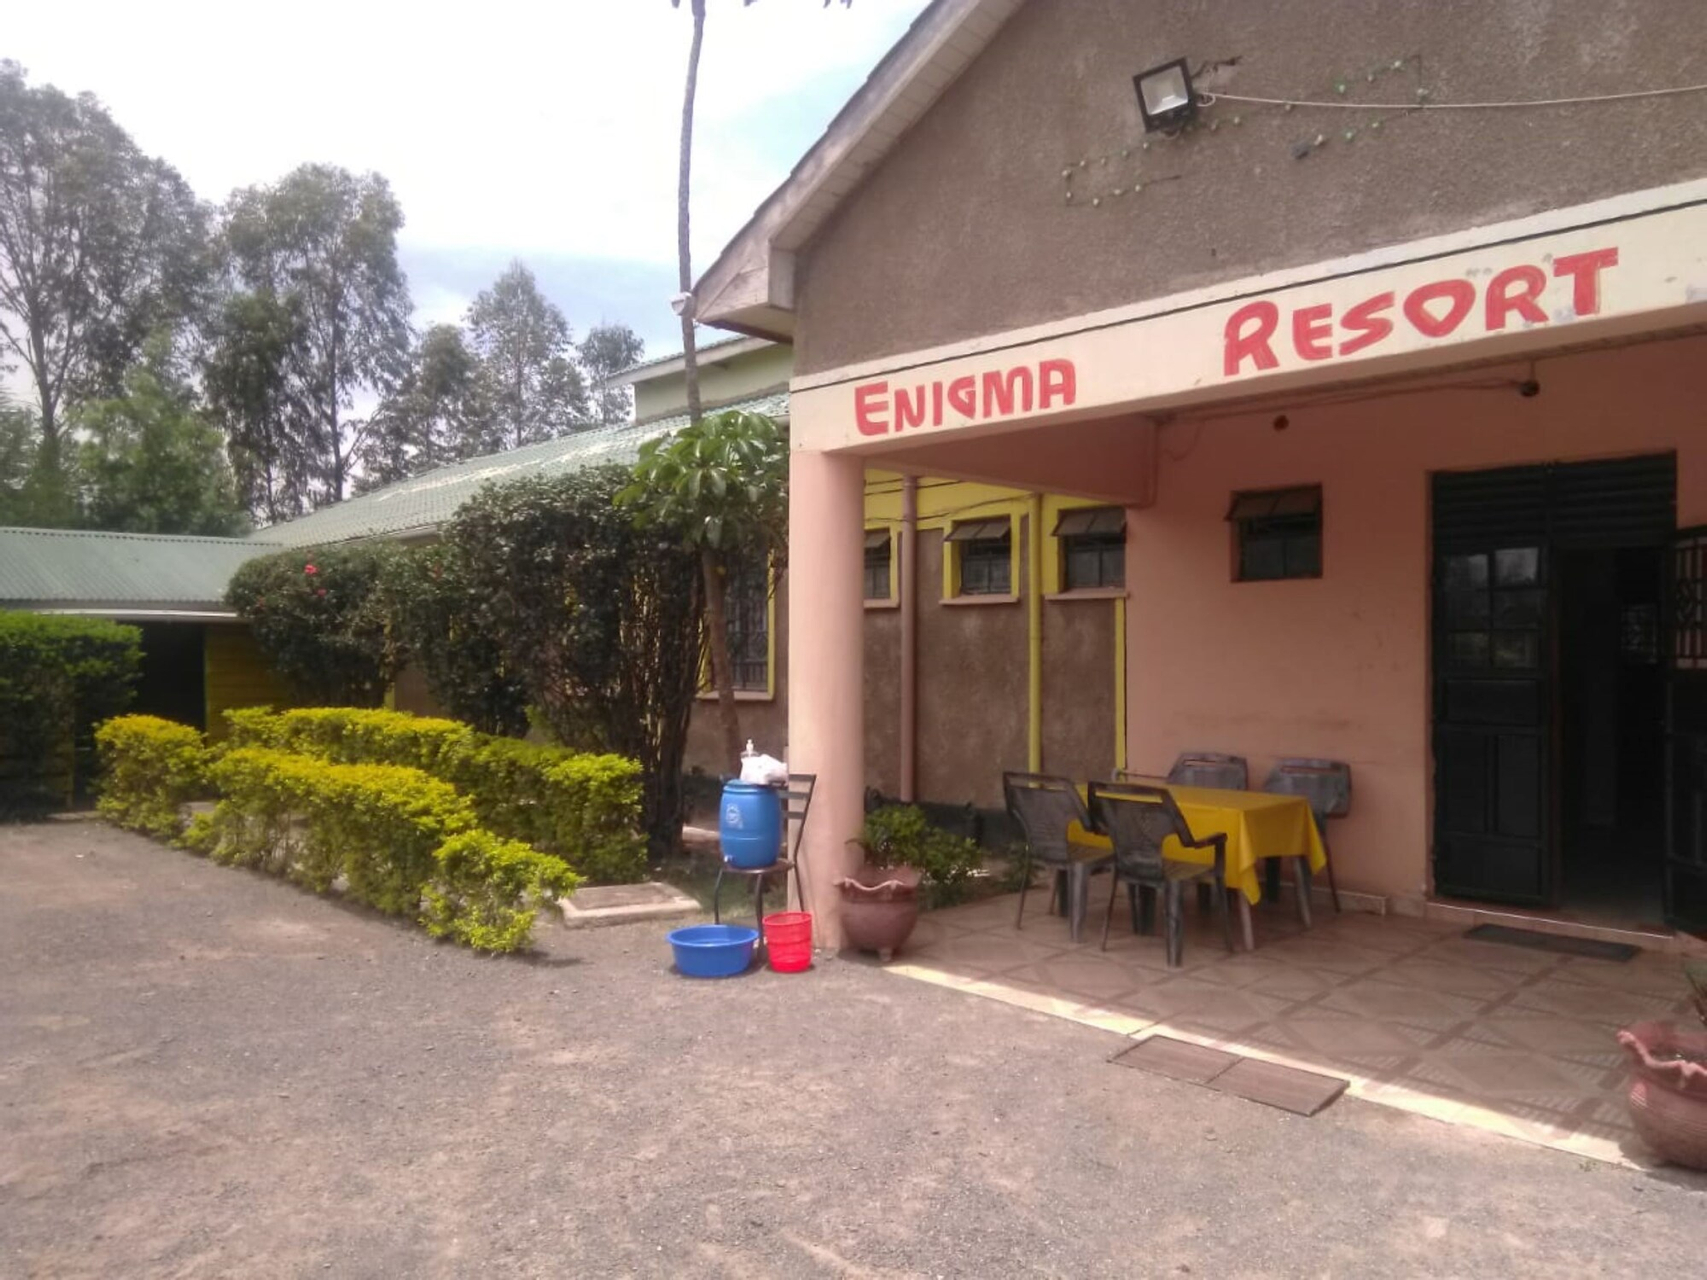 Exterior & Views 1, Enigma Resort, Kisumu East